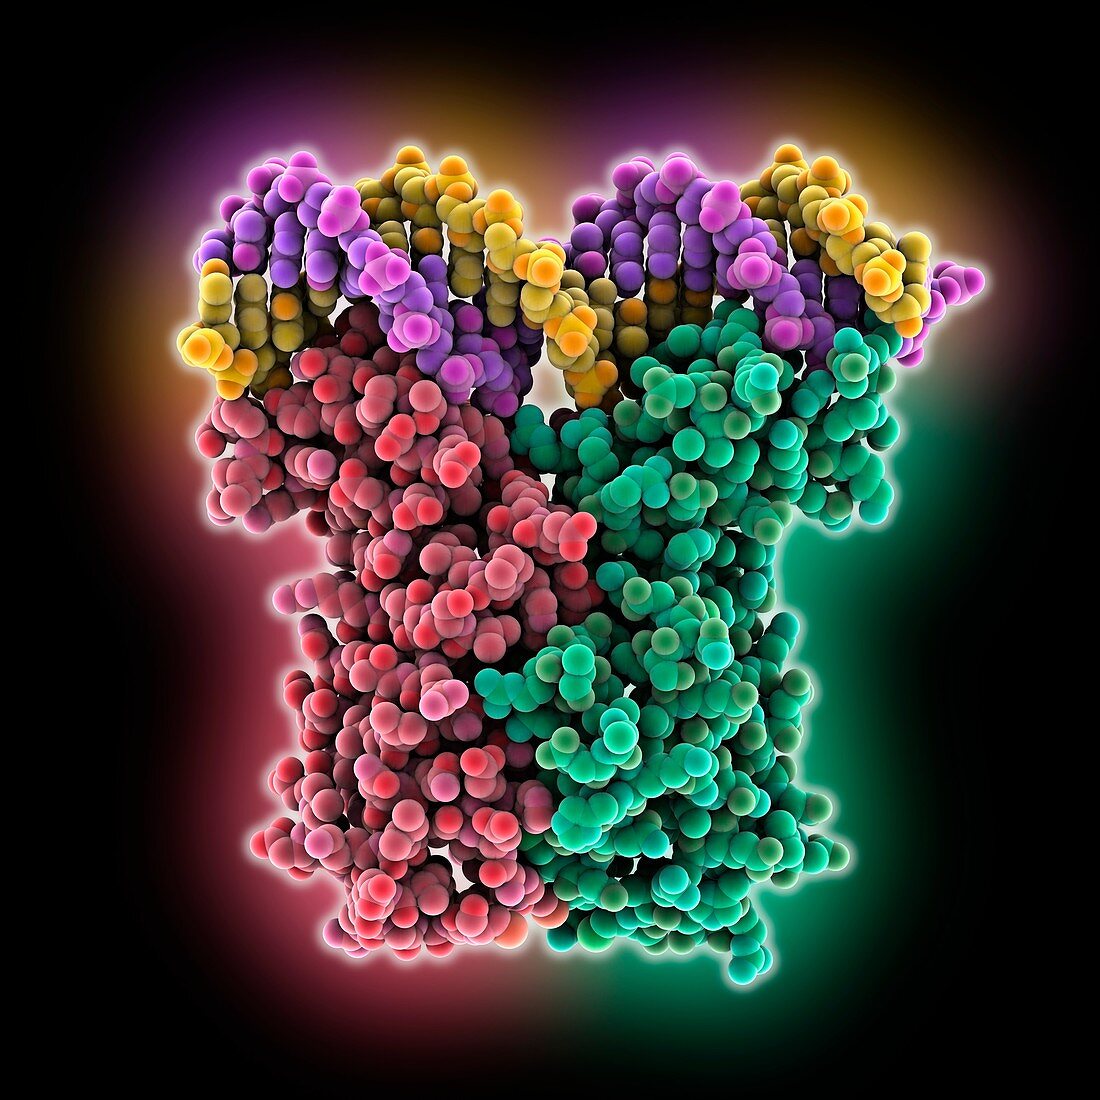 Regulator LuxR complexed with DNA, molecular model